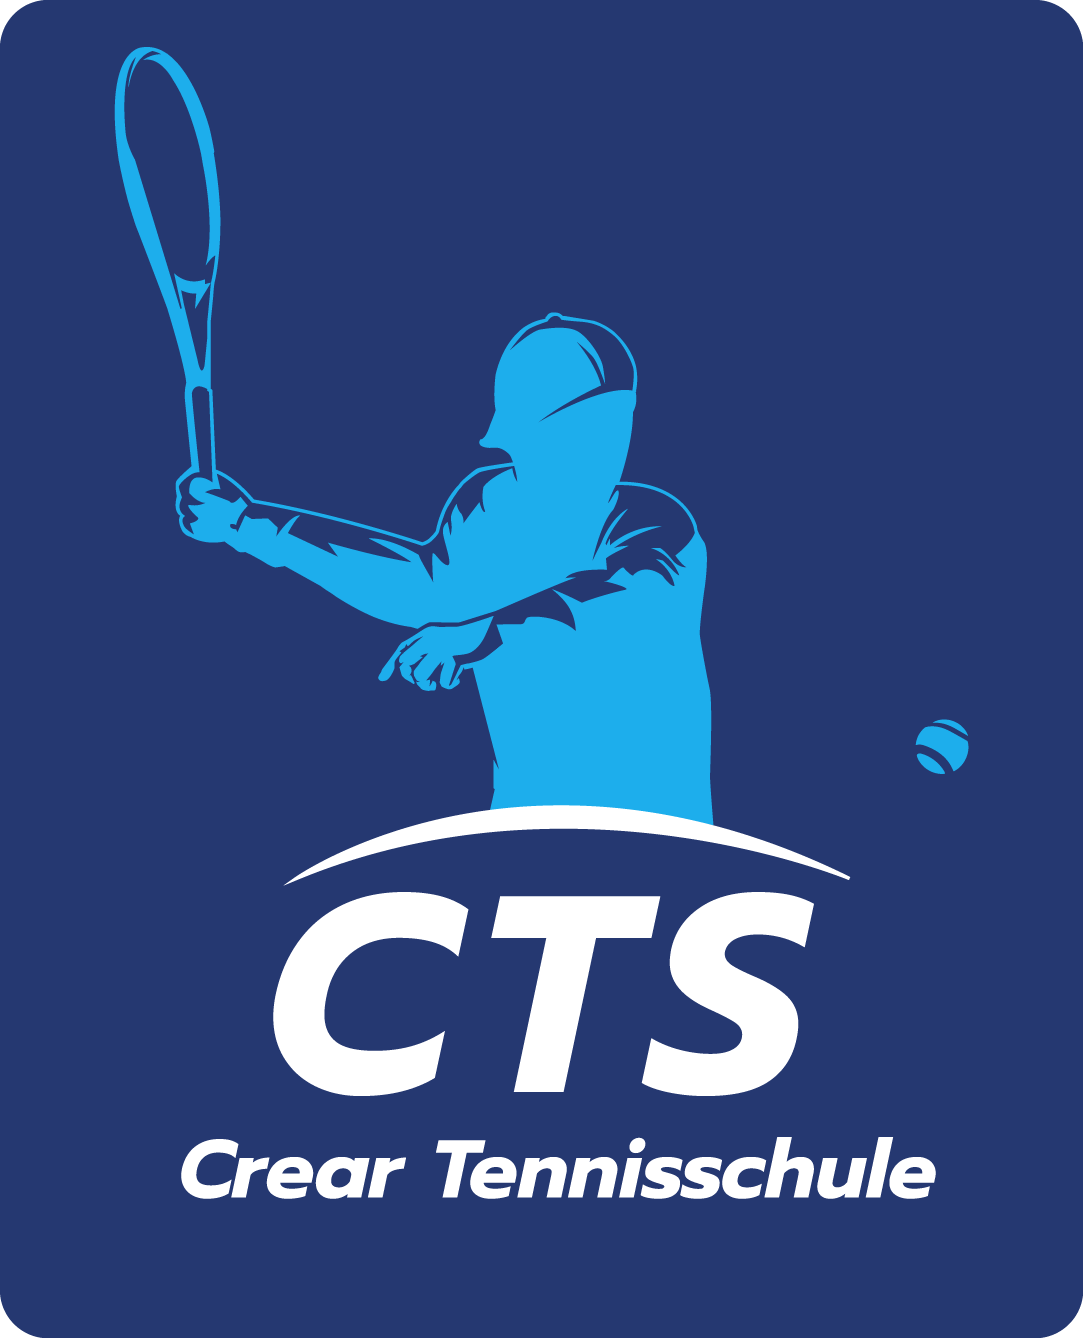 Crear-Tennisschule